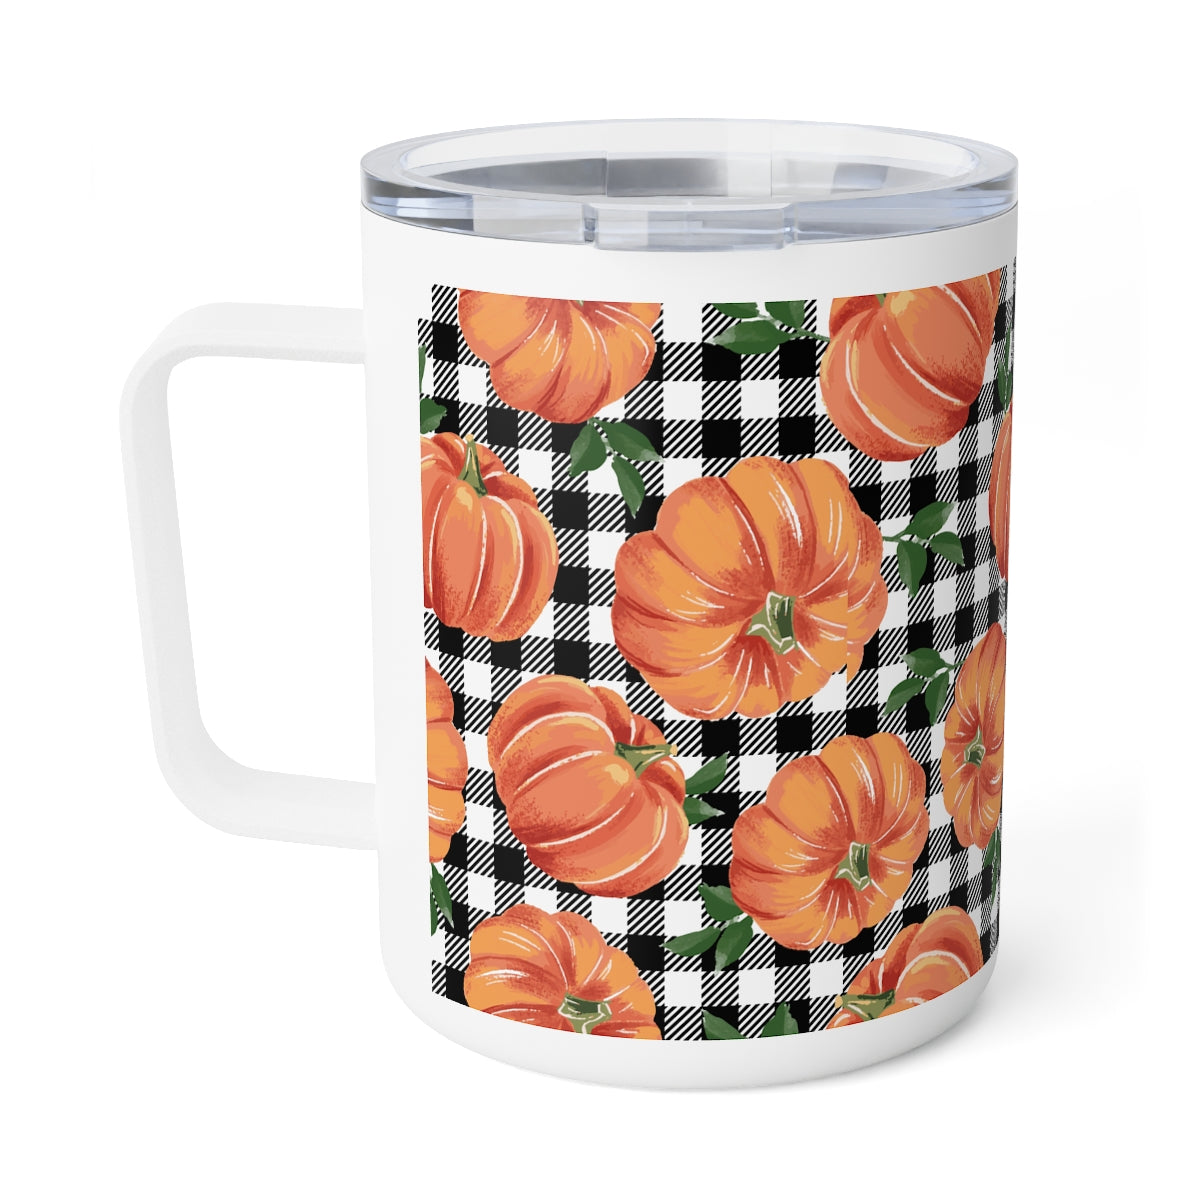 Farmhouse Pumpkins Insulated Coffee Mug, 10oz